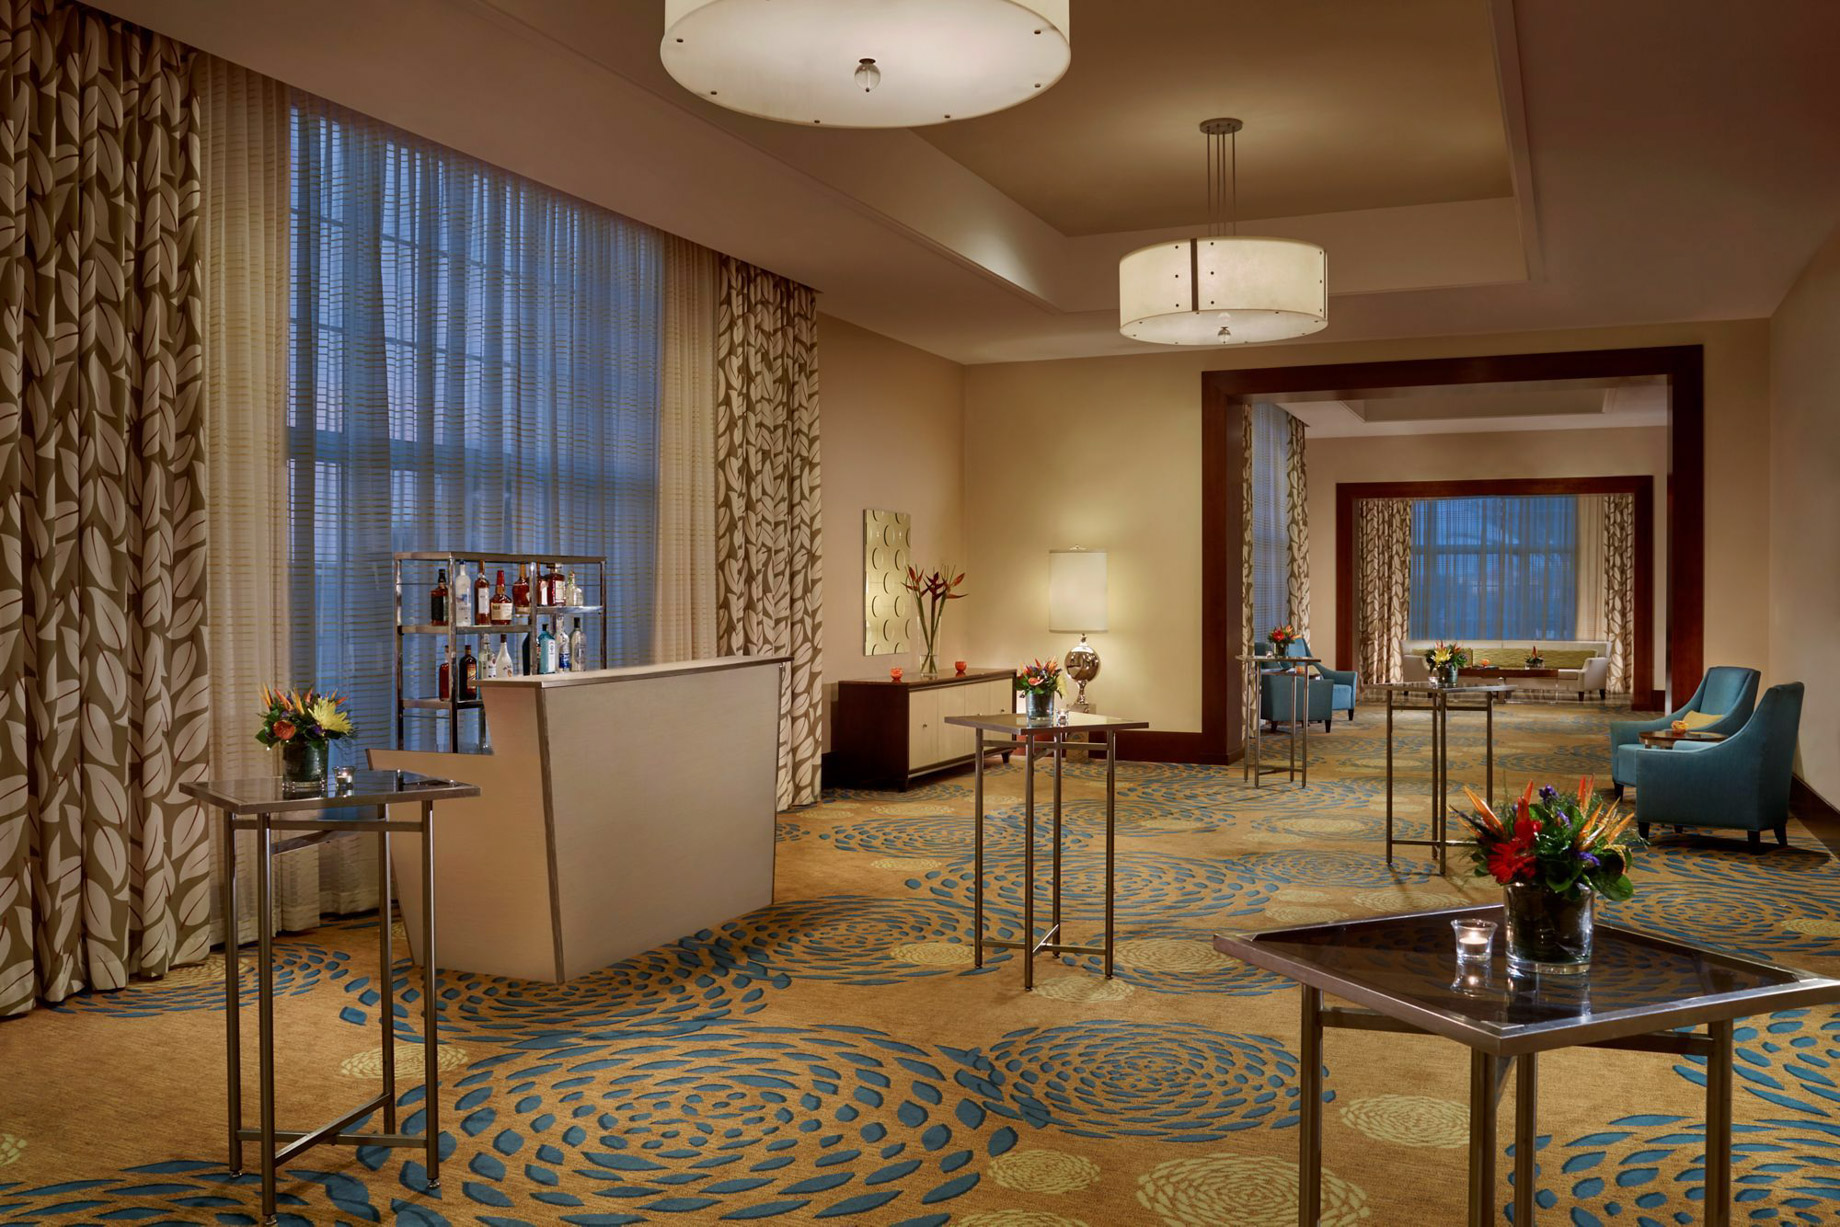 The Ritz-Carlton, Aruba Resort - Palm Beach, Aruba - Pre Function Area